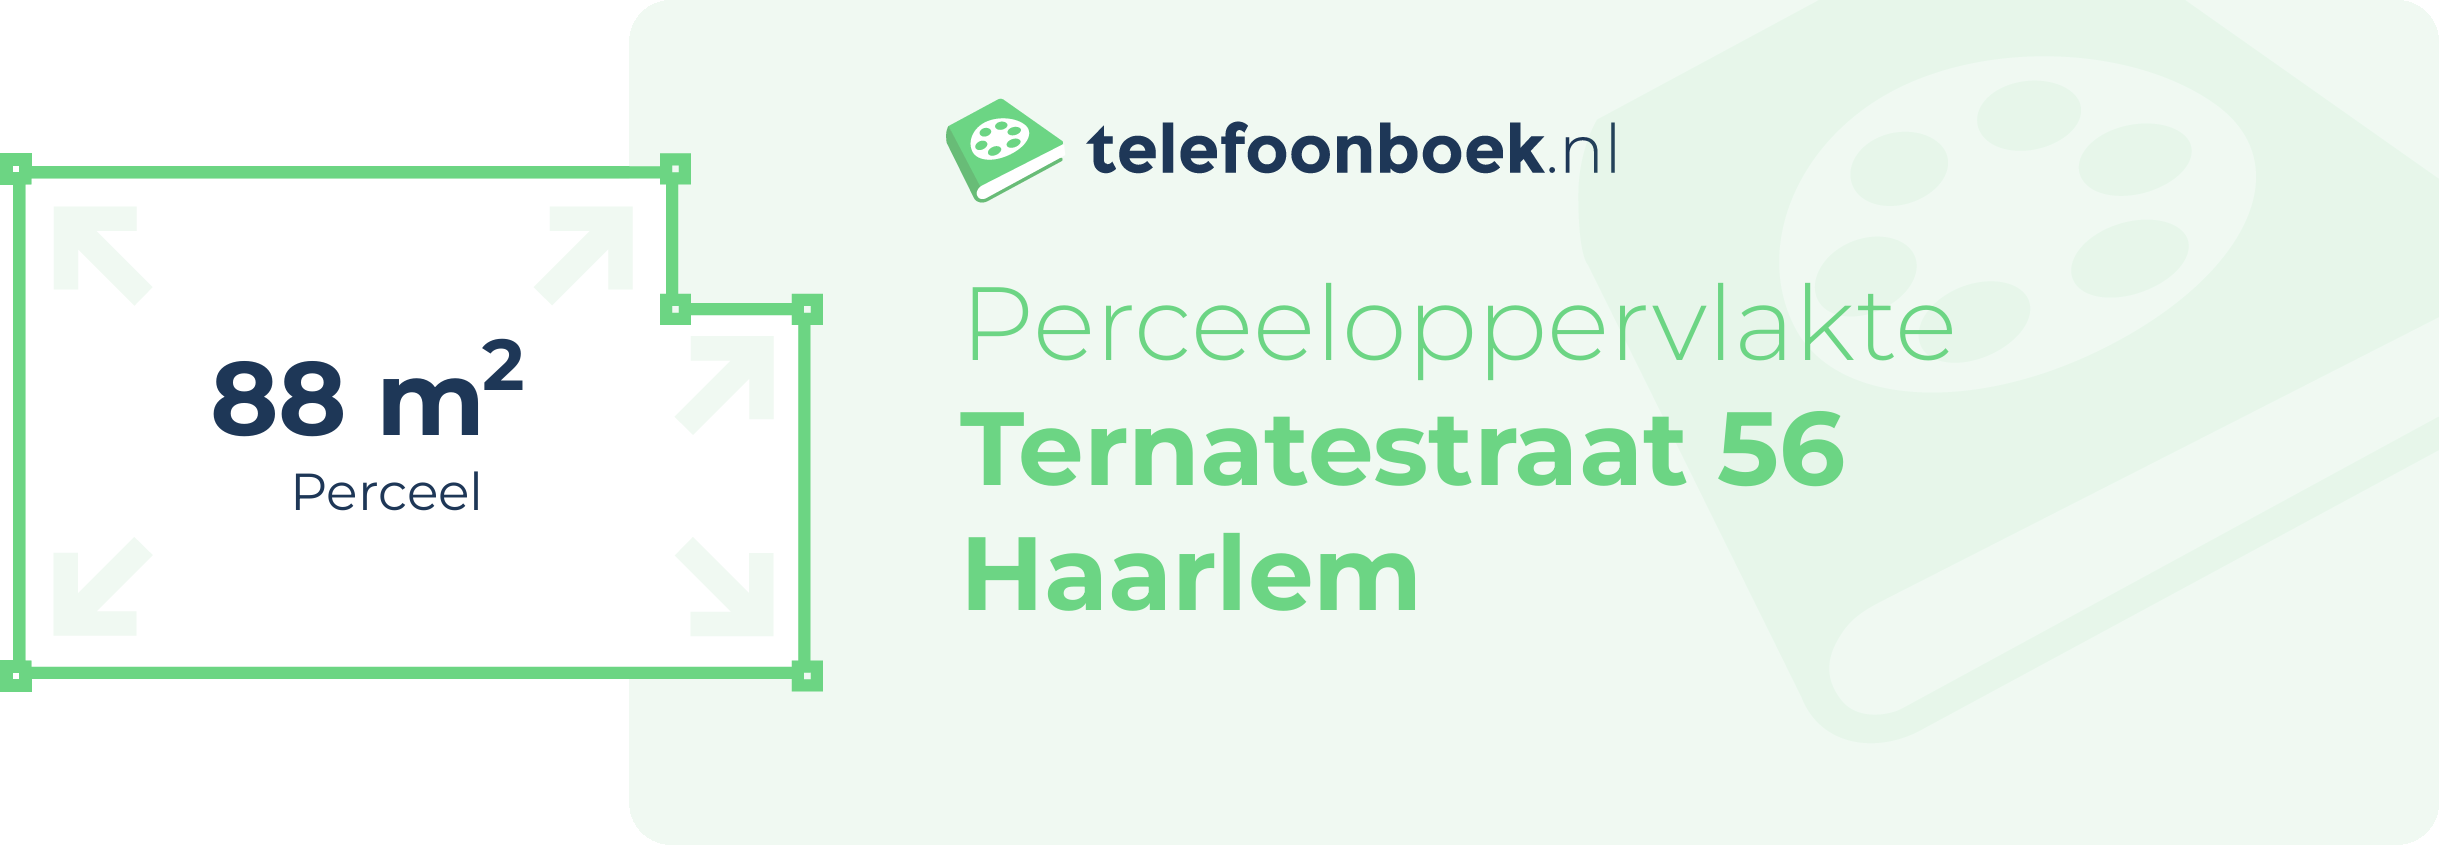 Perceeloppervlakte Ternatestraat 56 Haarlem